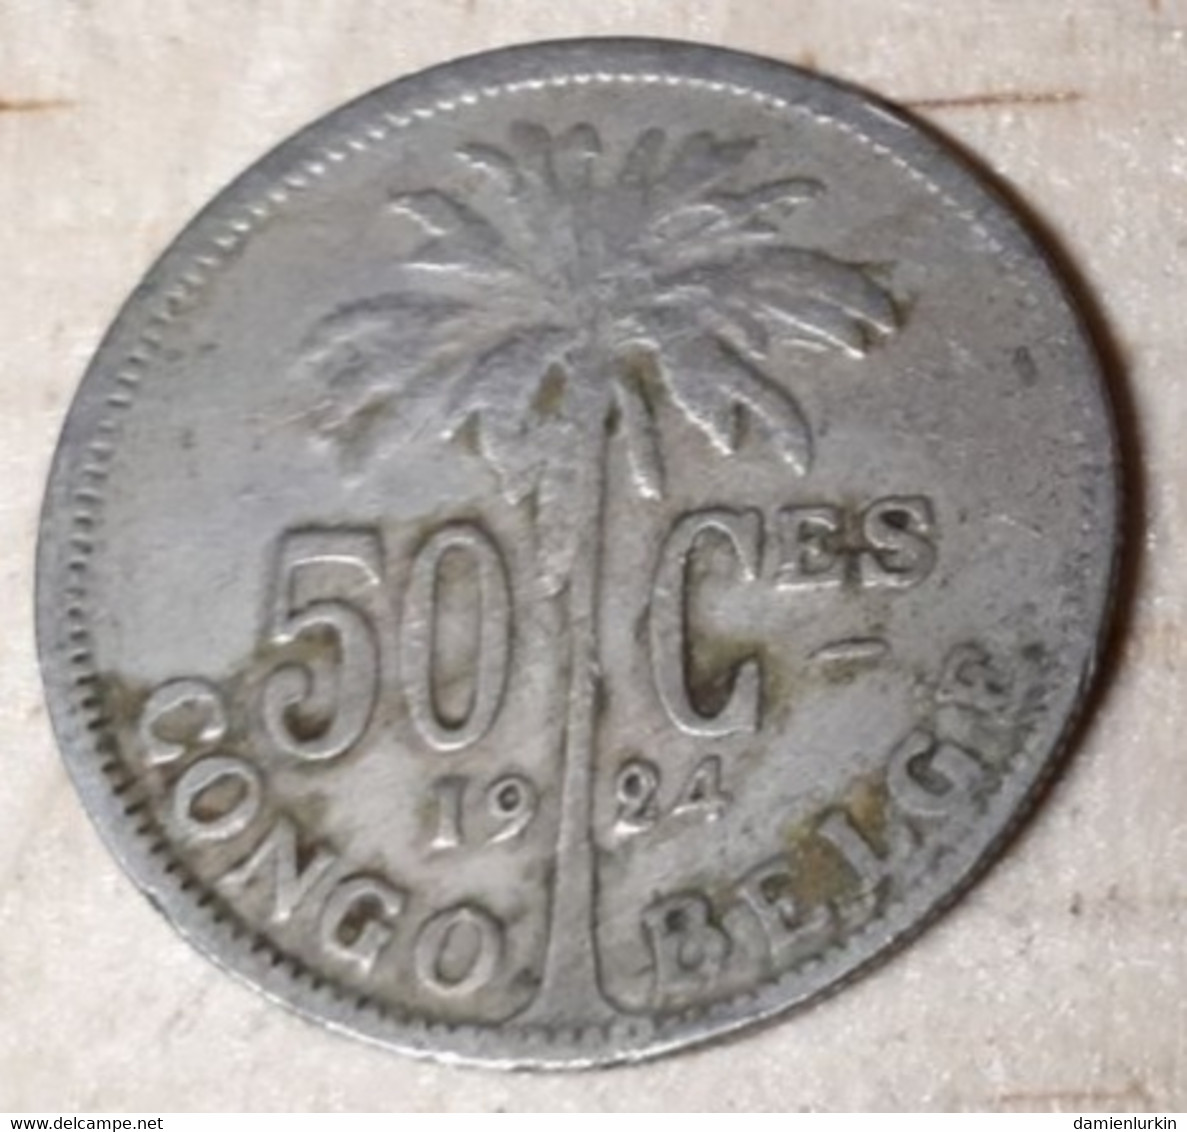 CONGO ALBERT I RARE 50 CENTIMES 1924 ONLY 1 MILLION EX. COTES : 8€-20€-50€-125€ - 1910-1934: Albert I